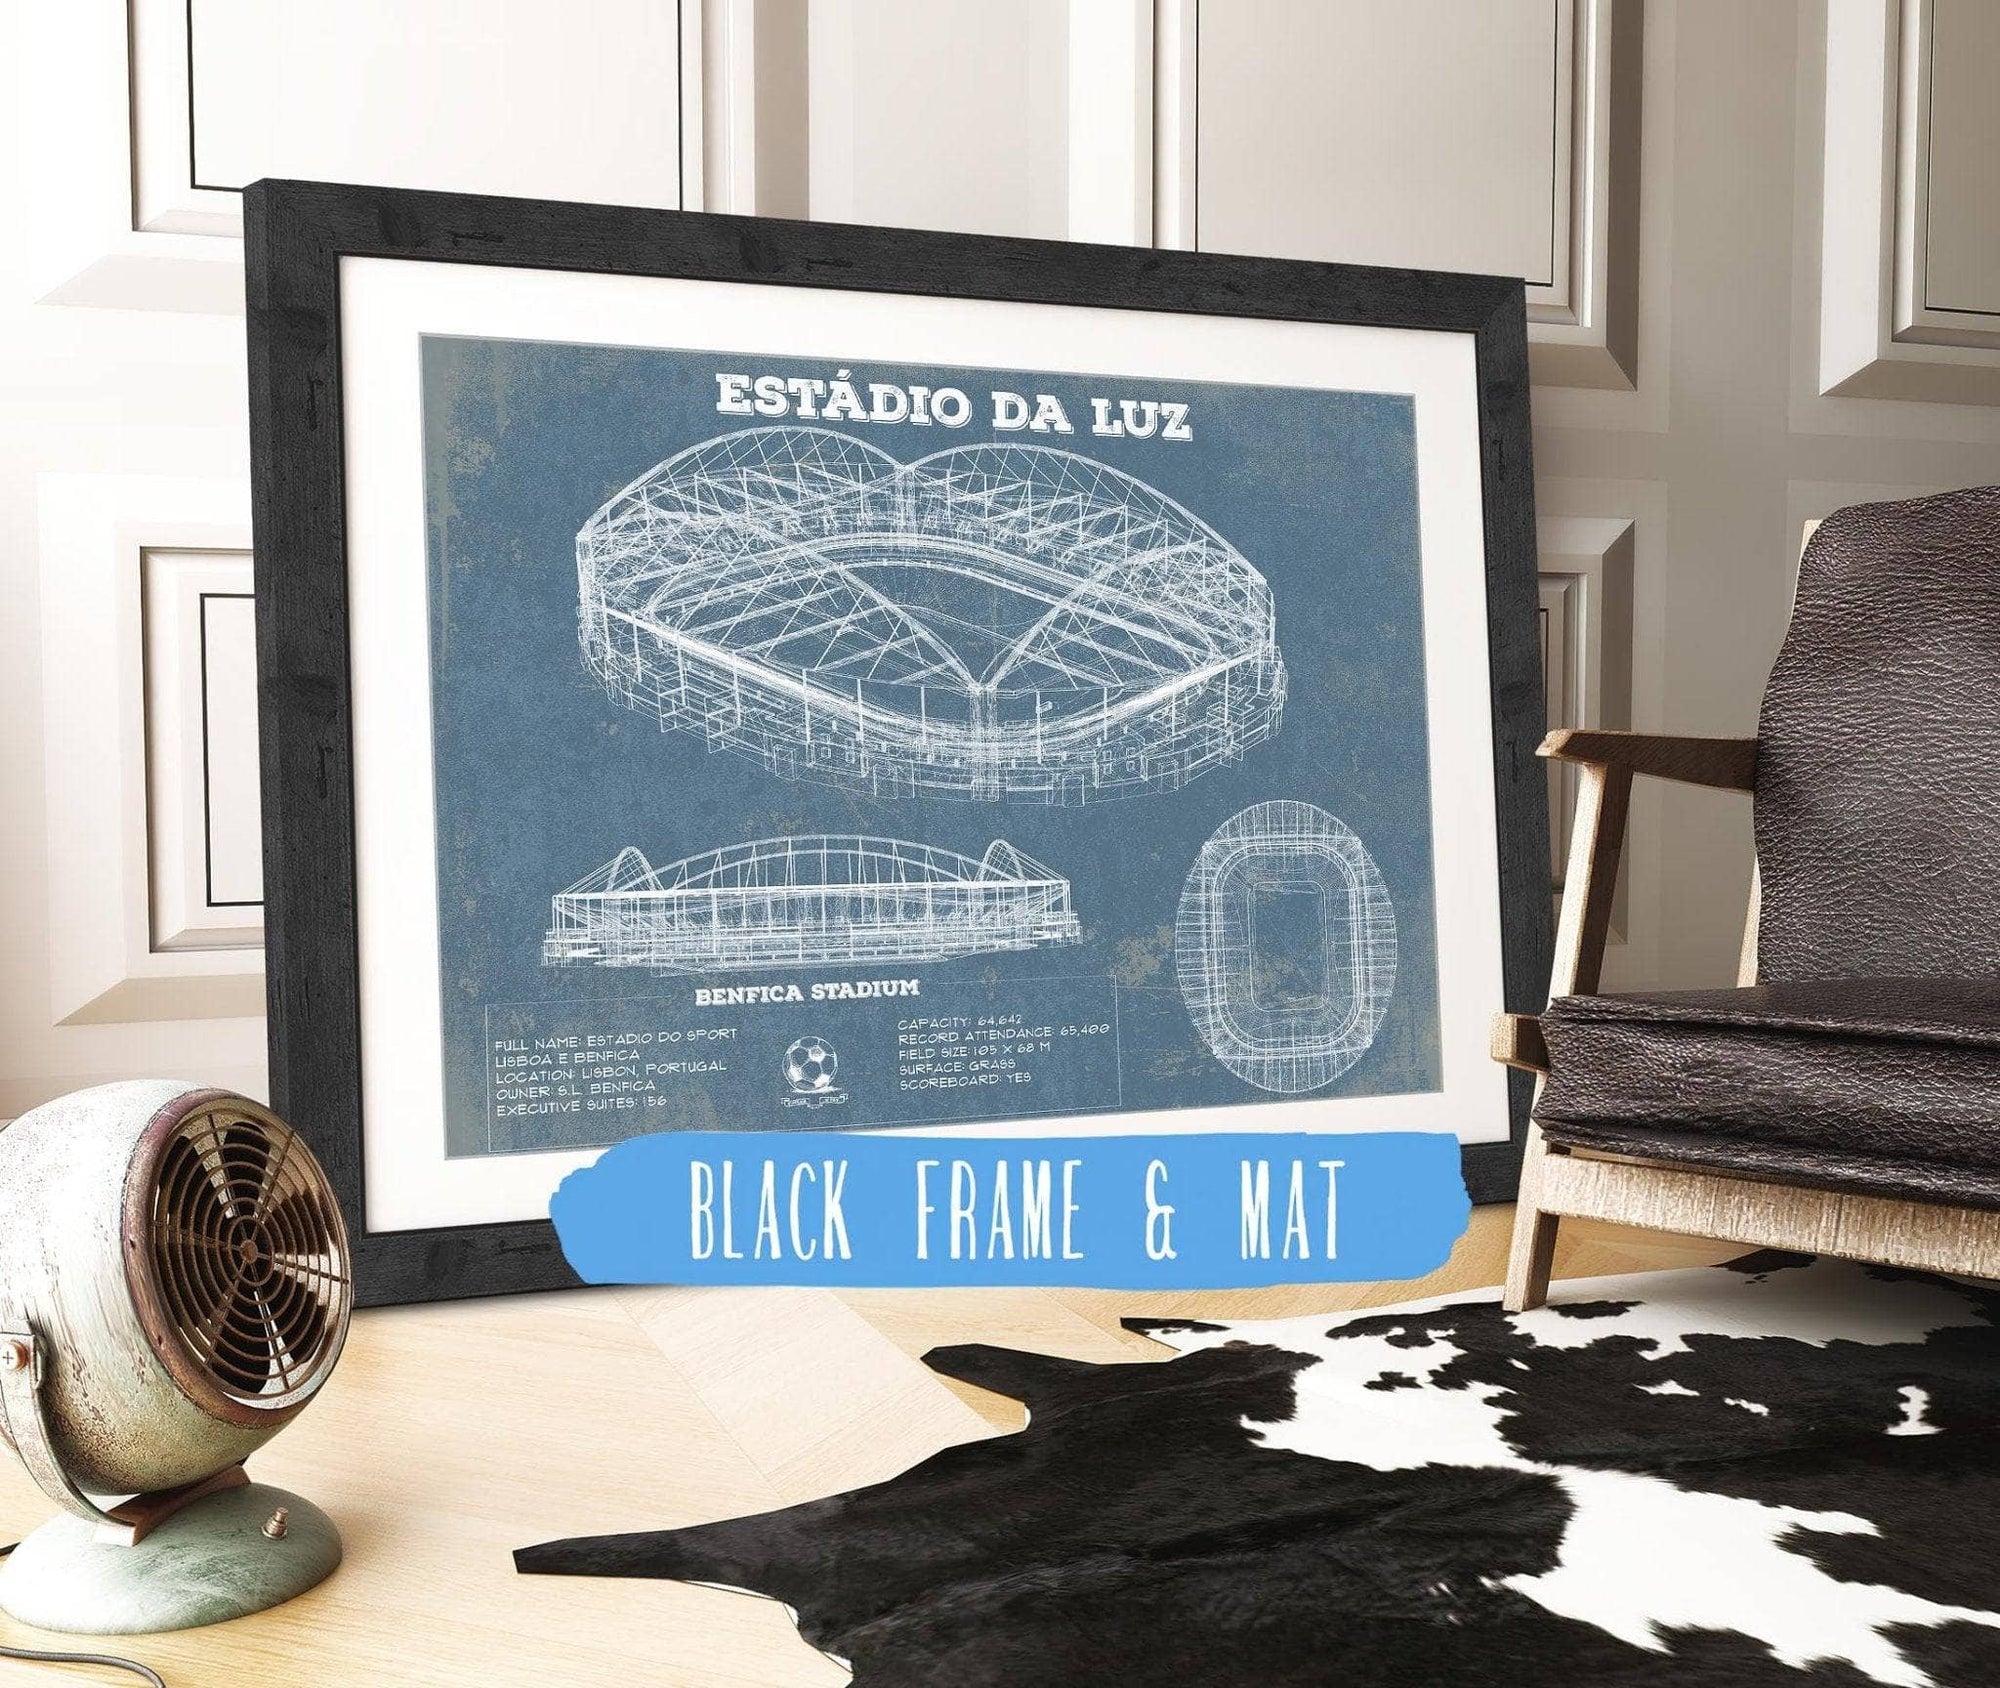 Cutler West Soccer Collection 14" x 11" / Black Frame & Mat Estudio da Luz (Benfica Stadium) - Portugal National Football Team Blueprint Vintage Soccer Print 933311007_57517